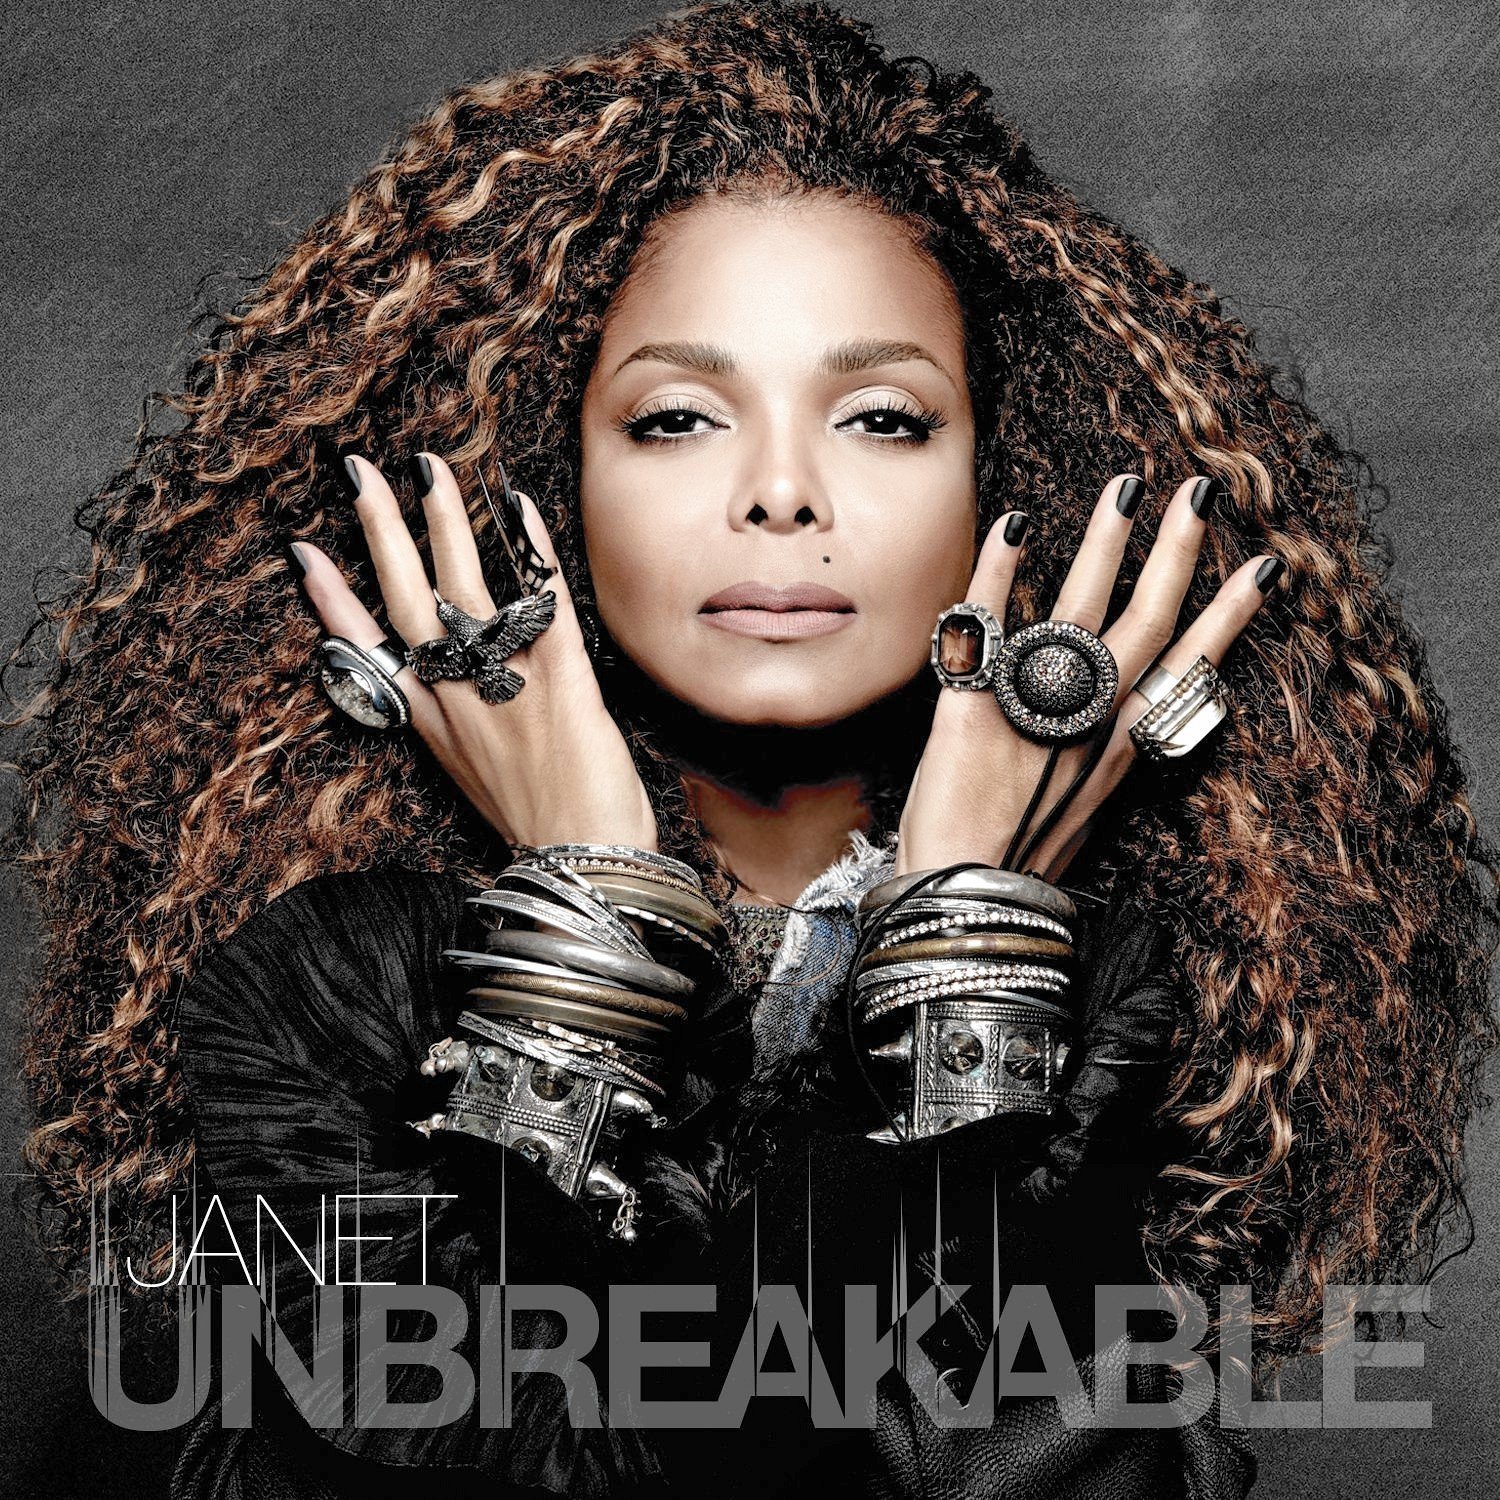 promo : Janet Jackson's Unbreakable album